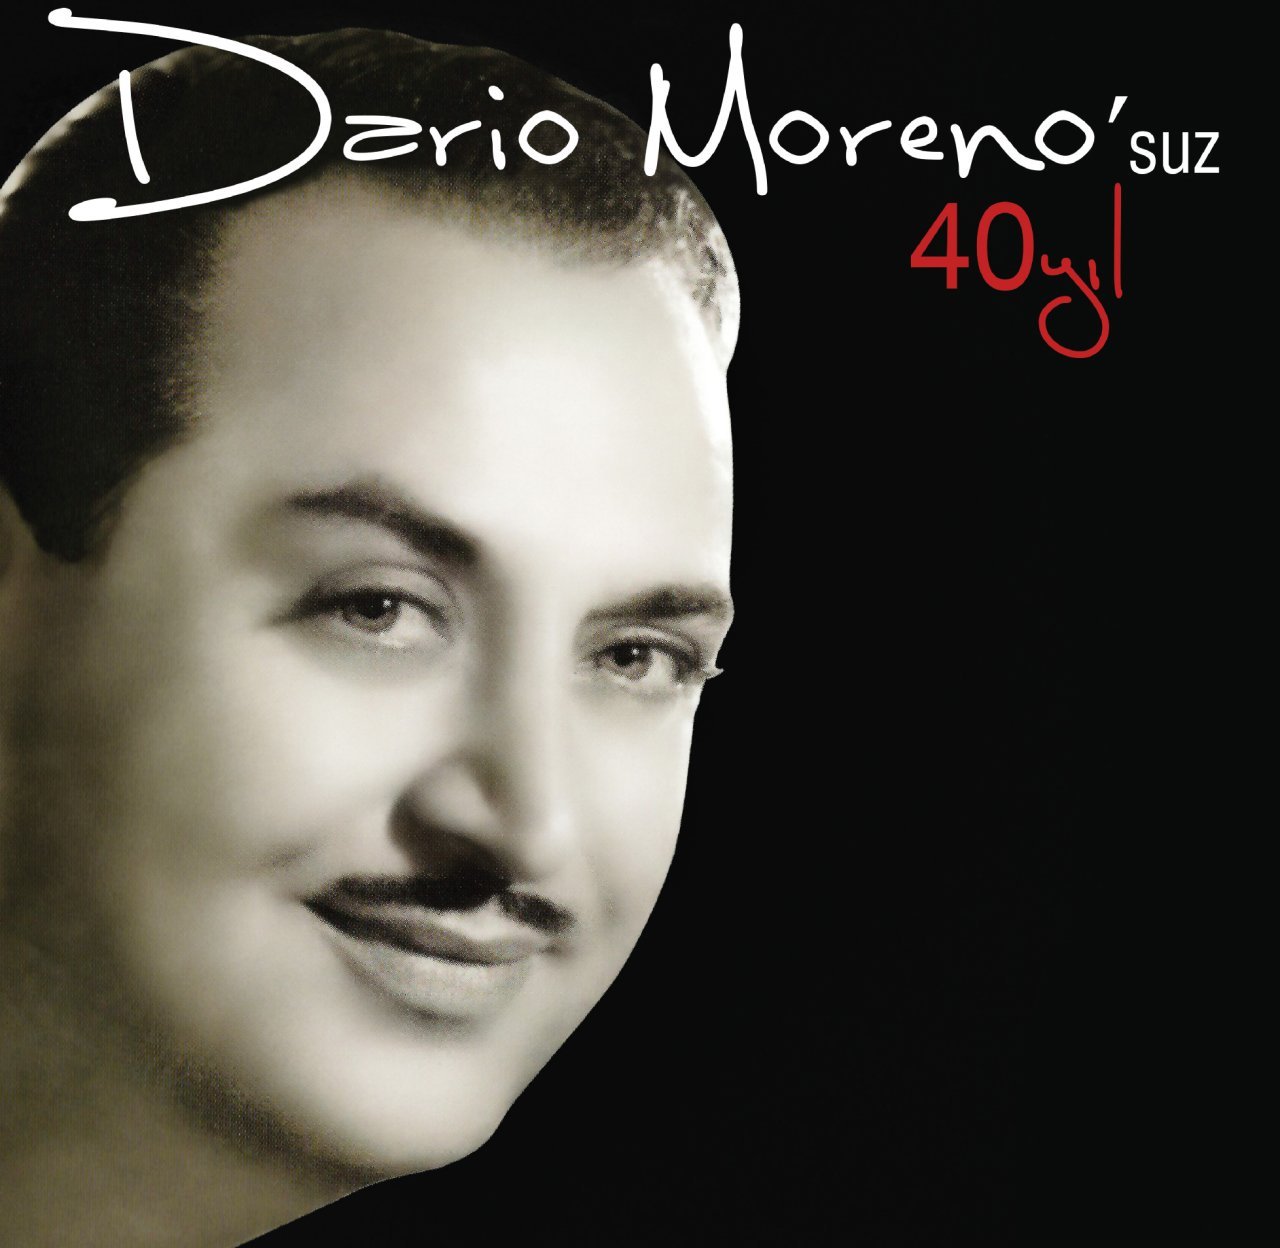 dario moreno - dario moreno'suz 40 yIl- Vinyl, LP, Album,PLAK